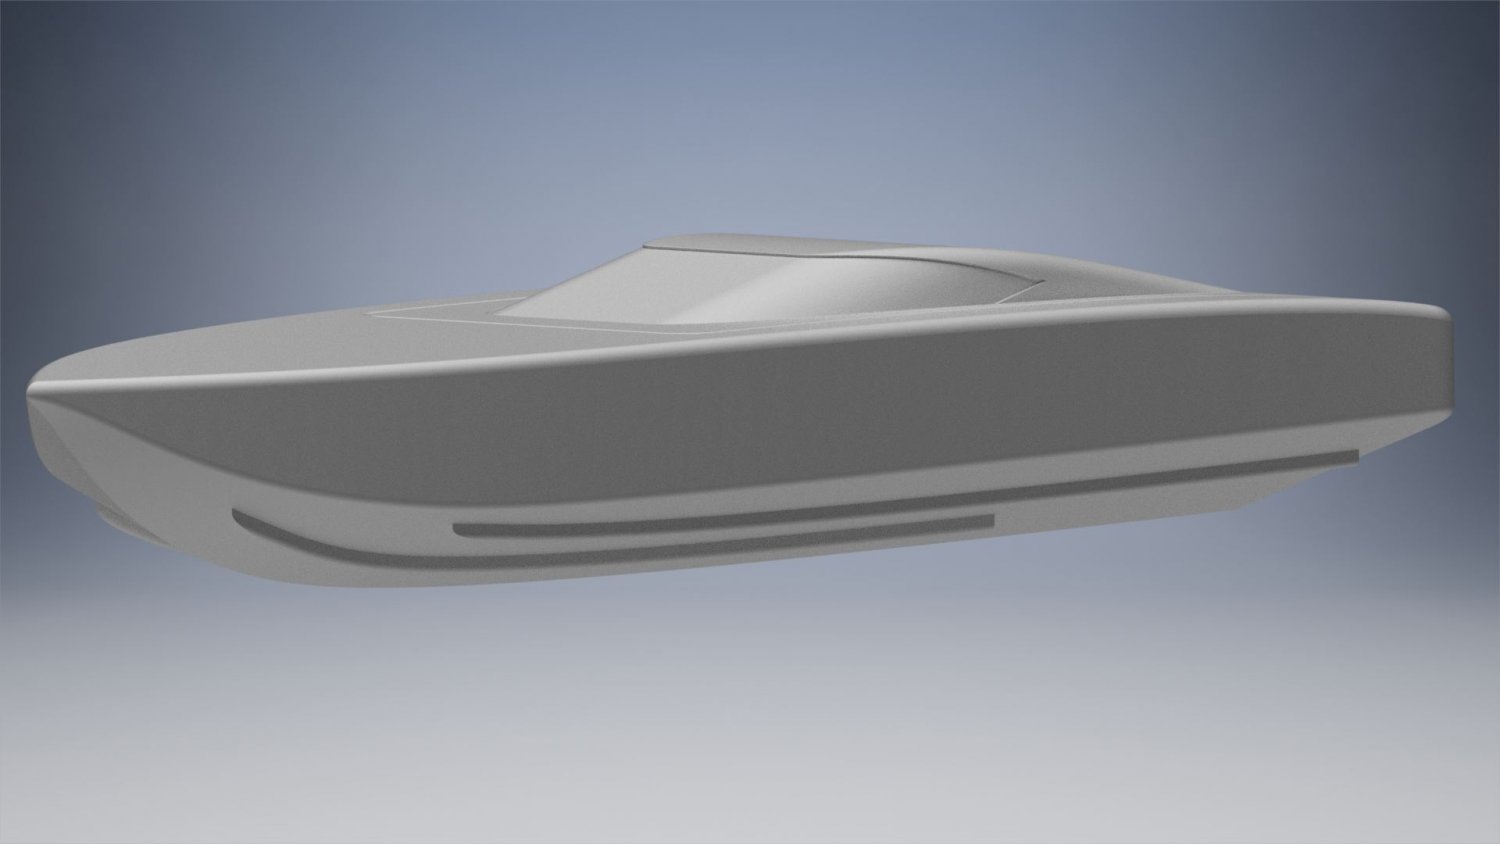 3D Printable Rc Boat